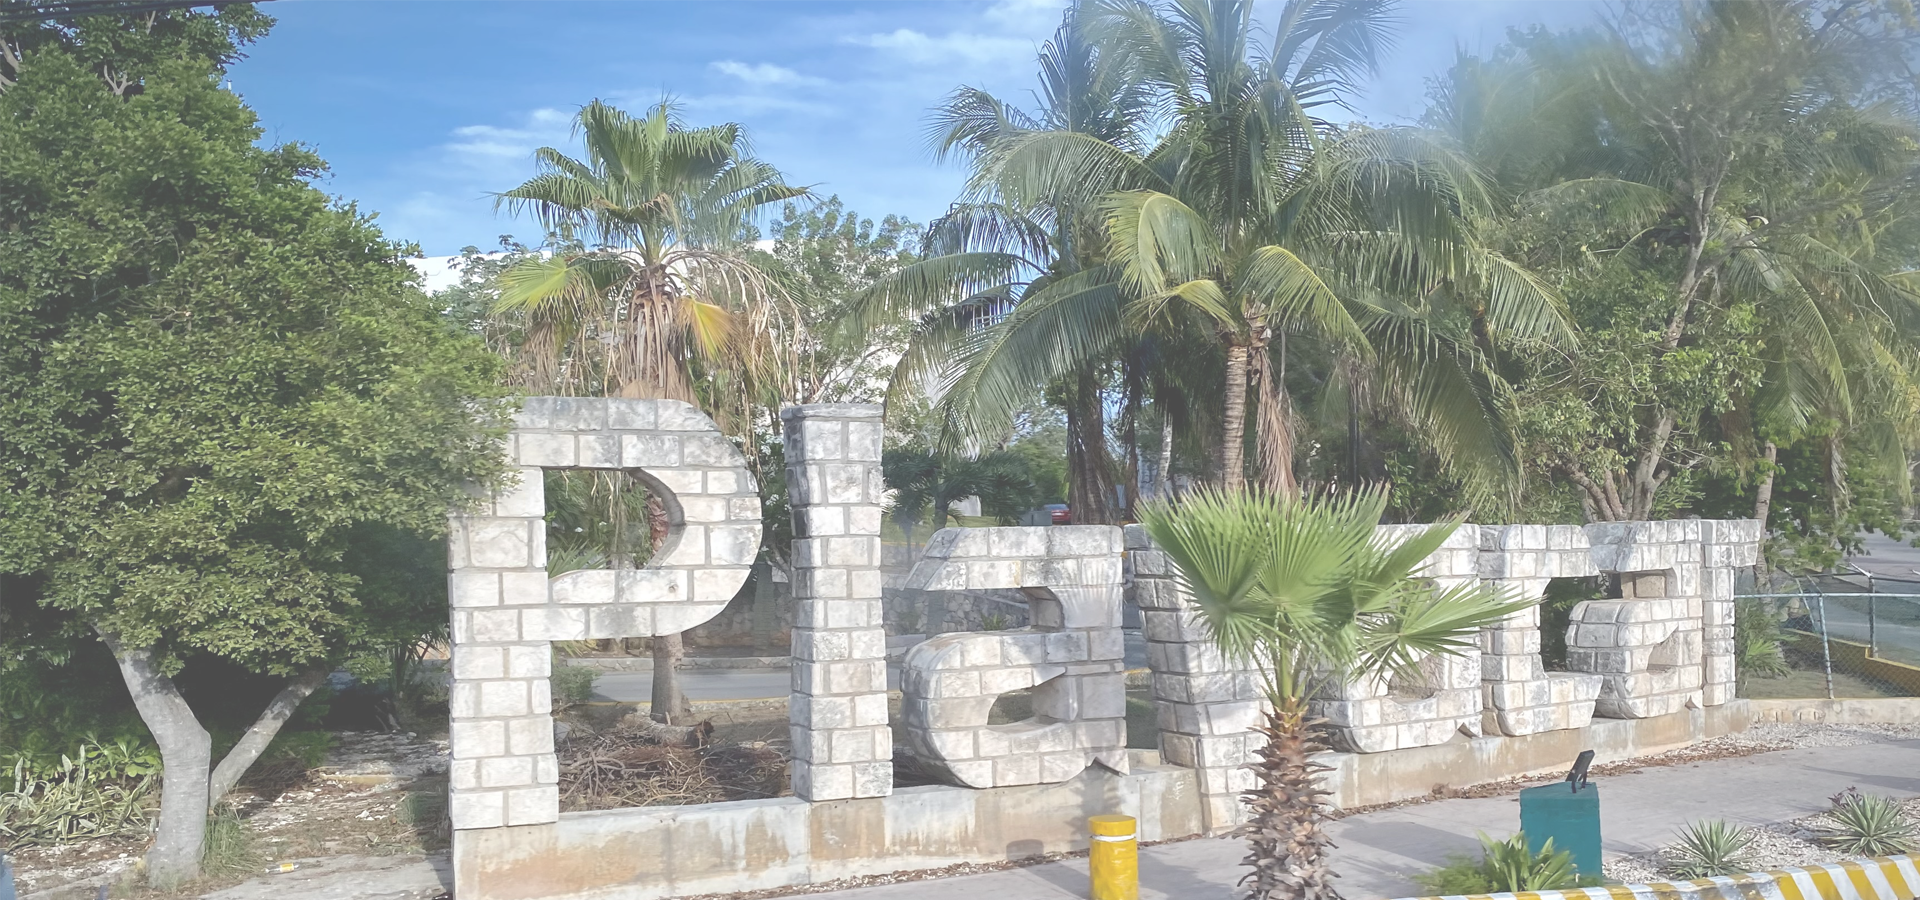 <b>Playa del Carmen, Quintana Roo, Mexico</b>